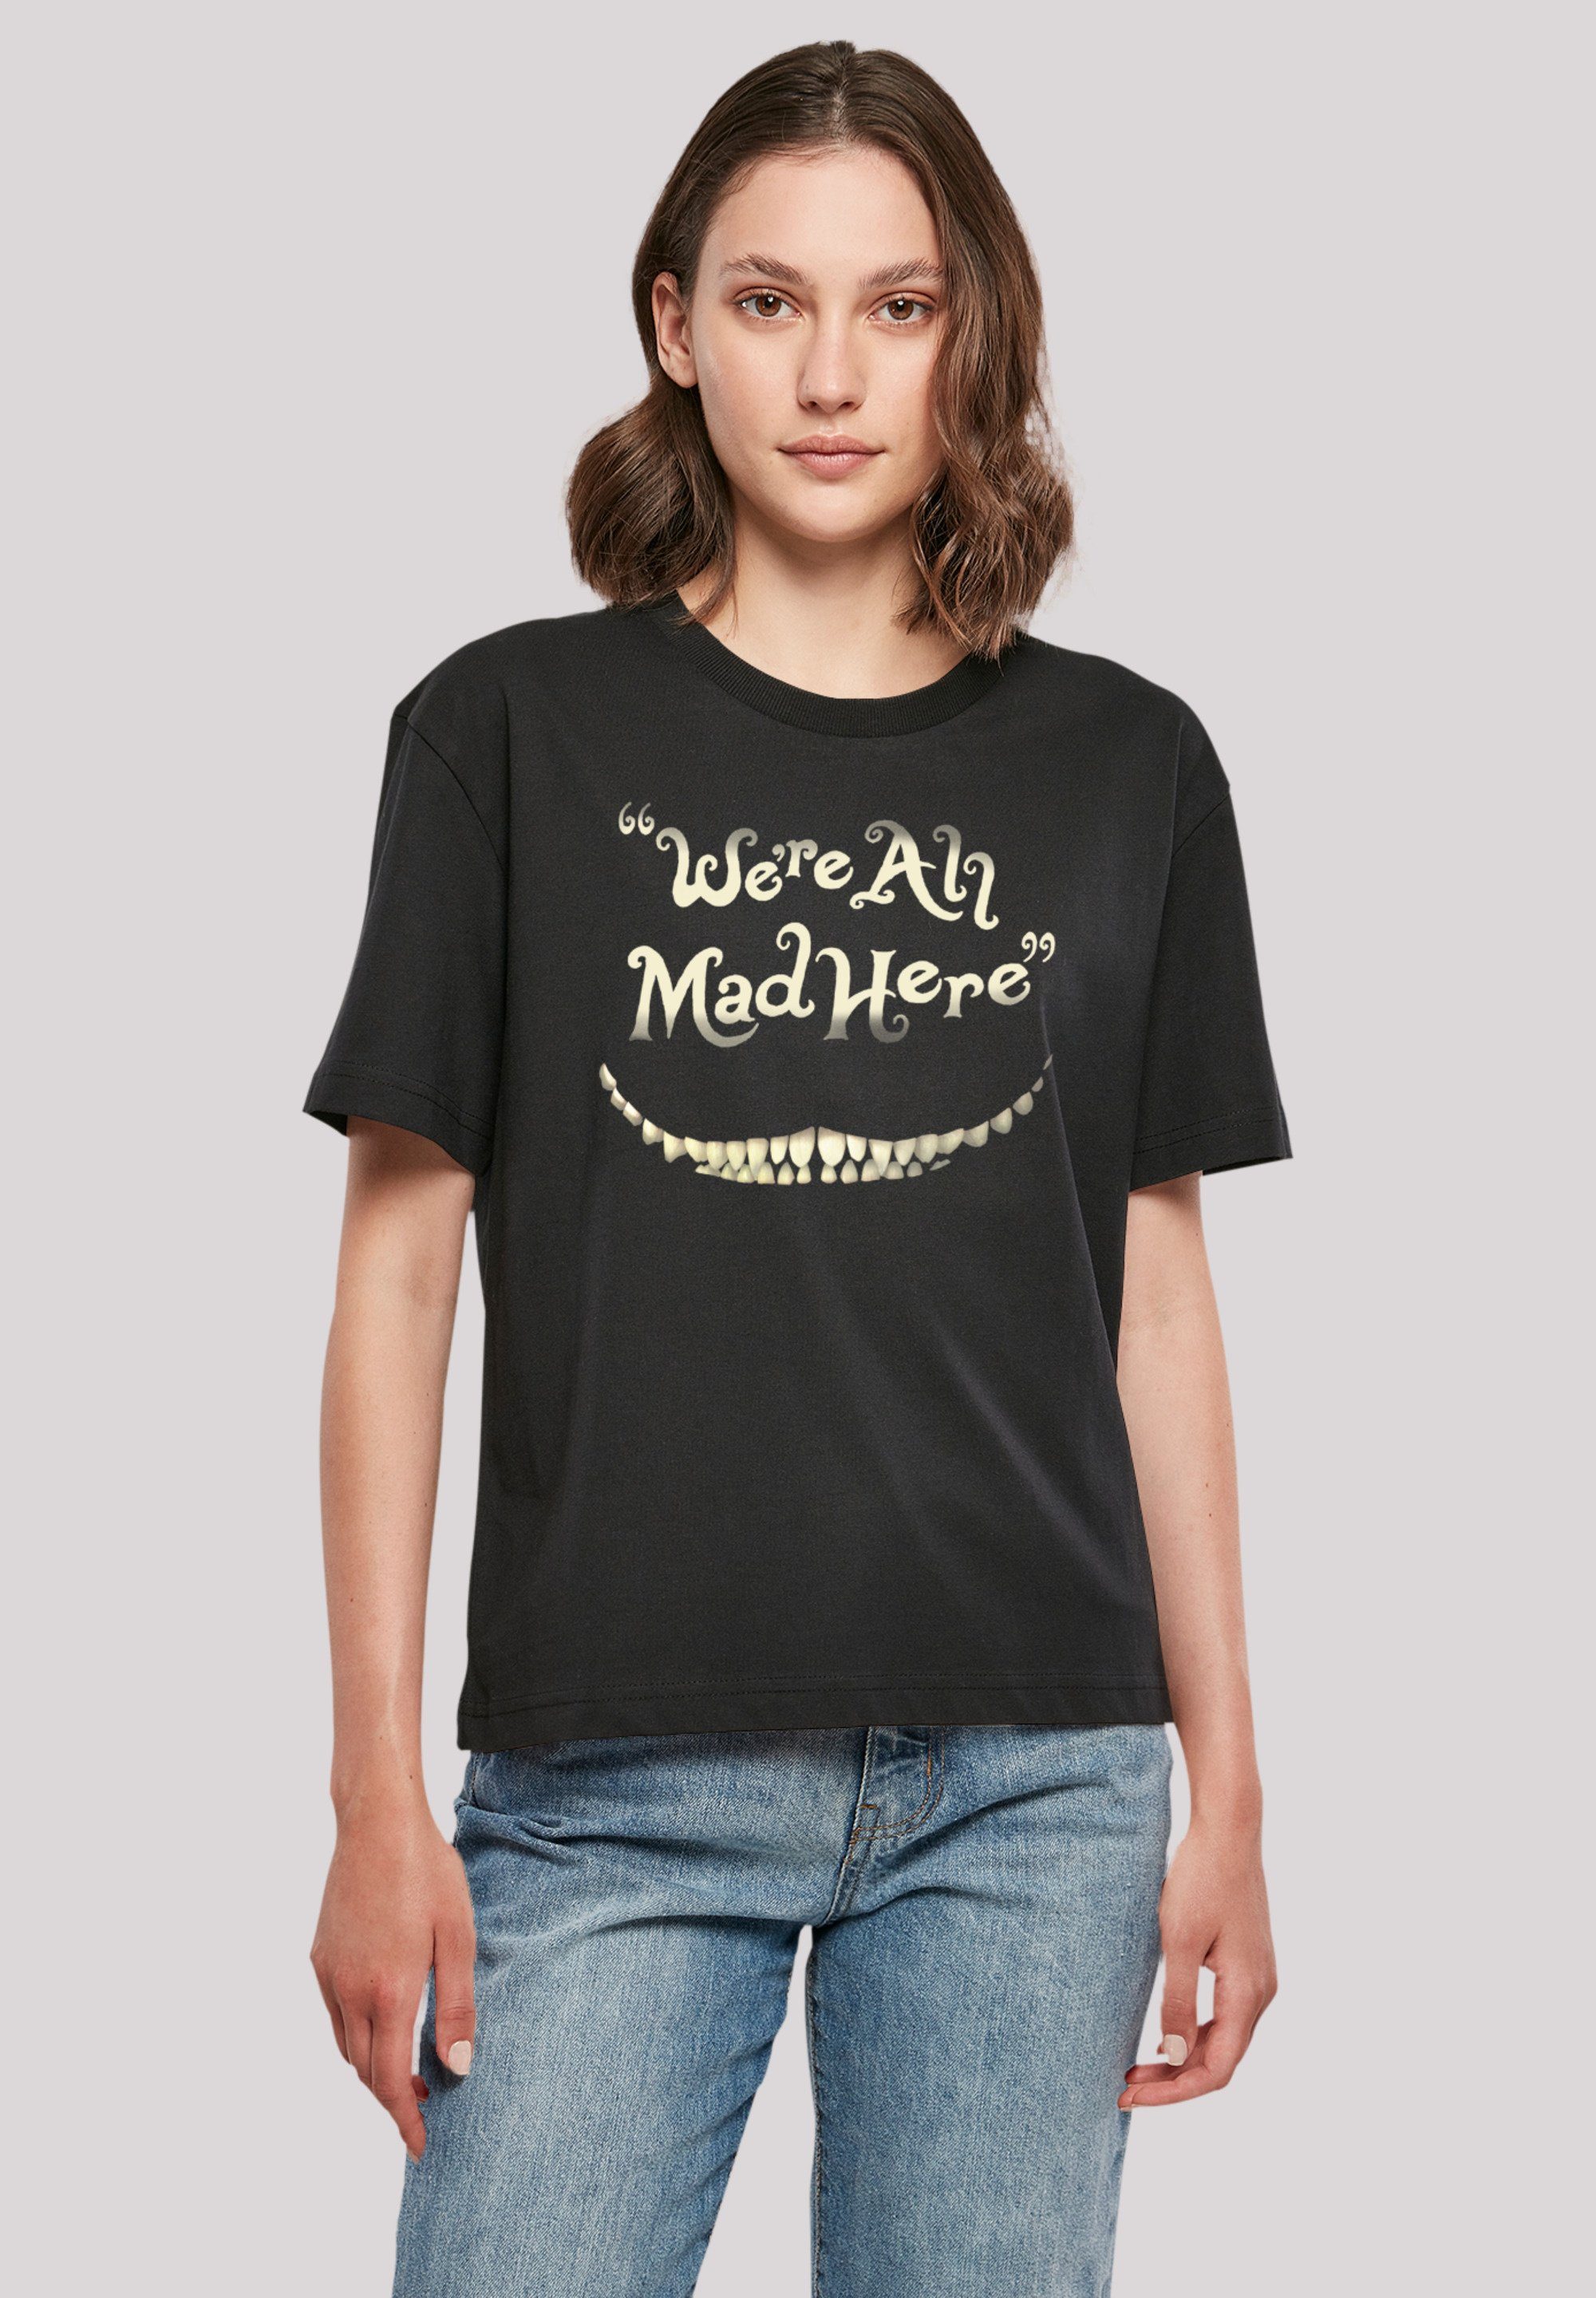 F4NT4STIC T-Shirt Disney im Alice Qualität Here Smile Premium Wunderland Mad